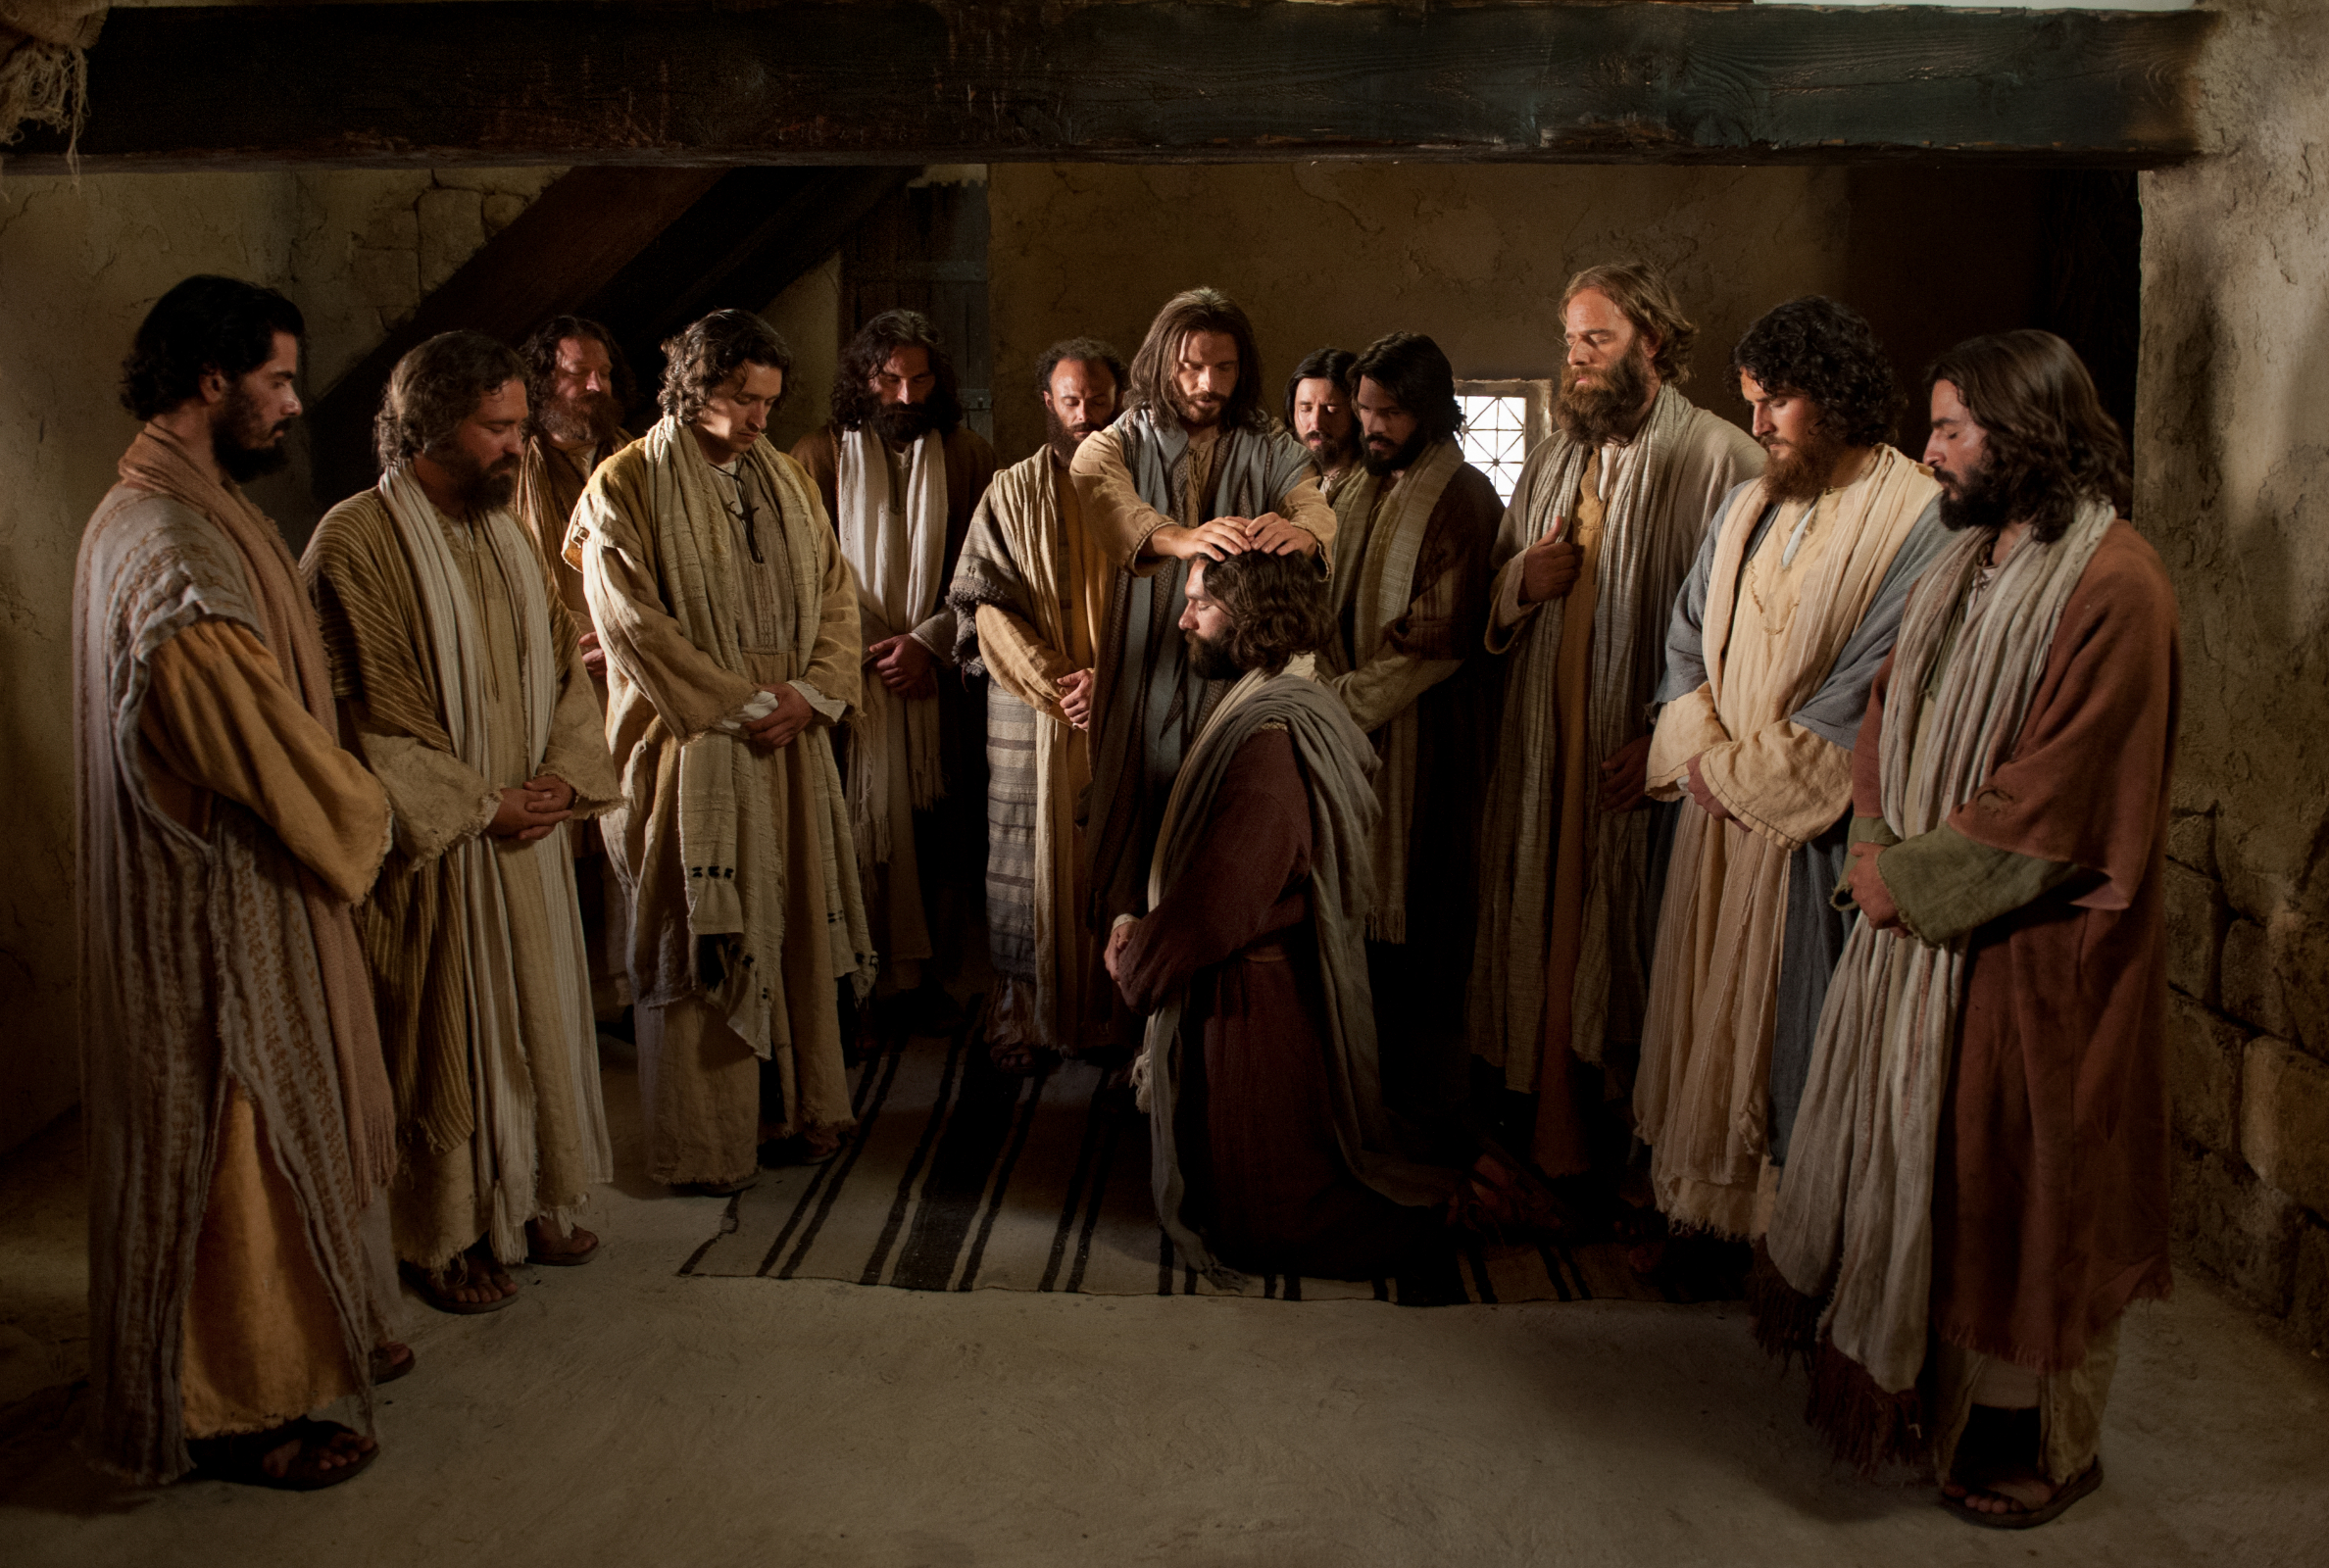 twelve apostles of christ